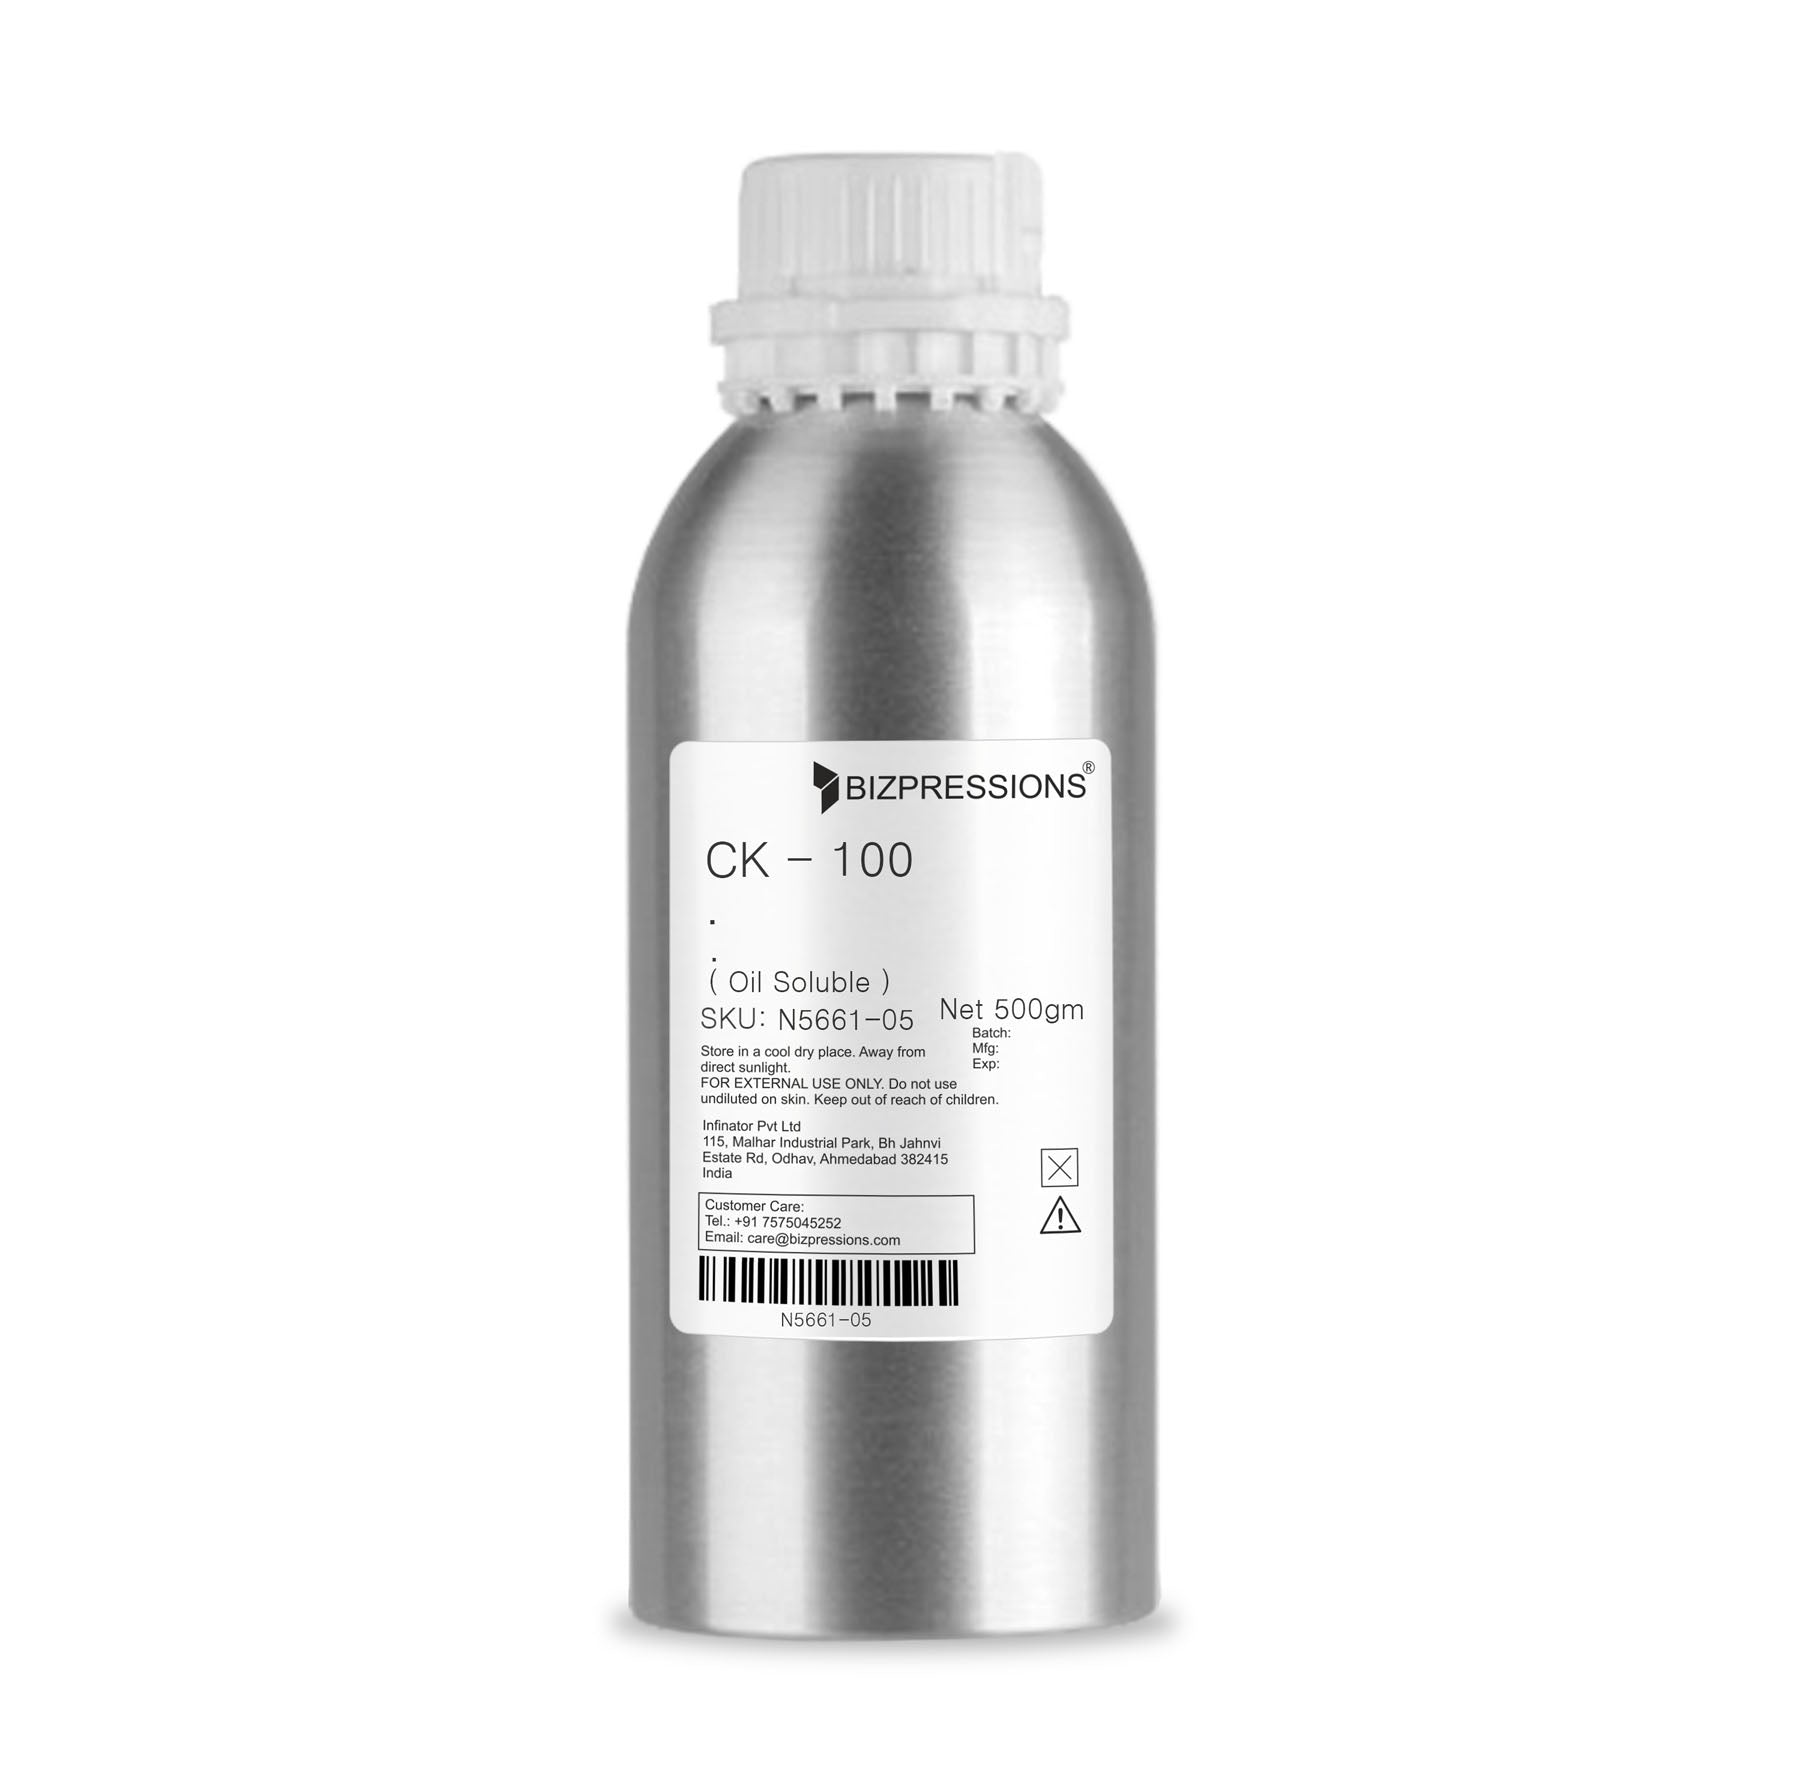 CK - 100 - Fragrance ( Oil Soluble ) - 500 gm